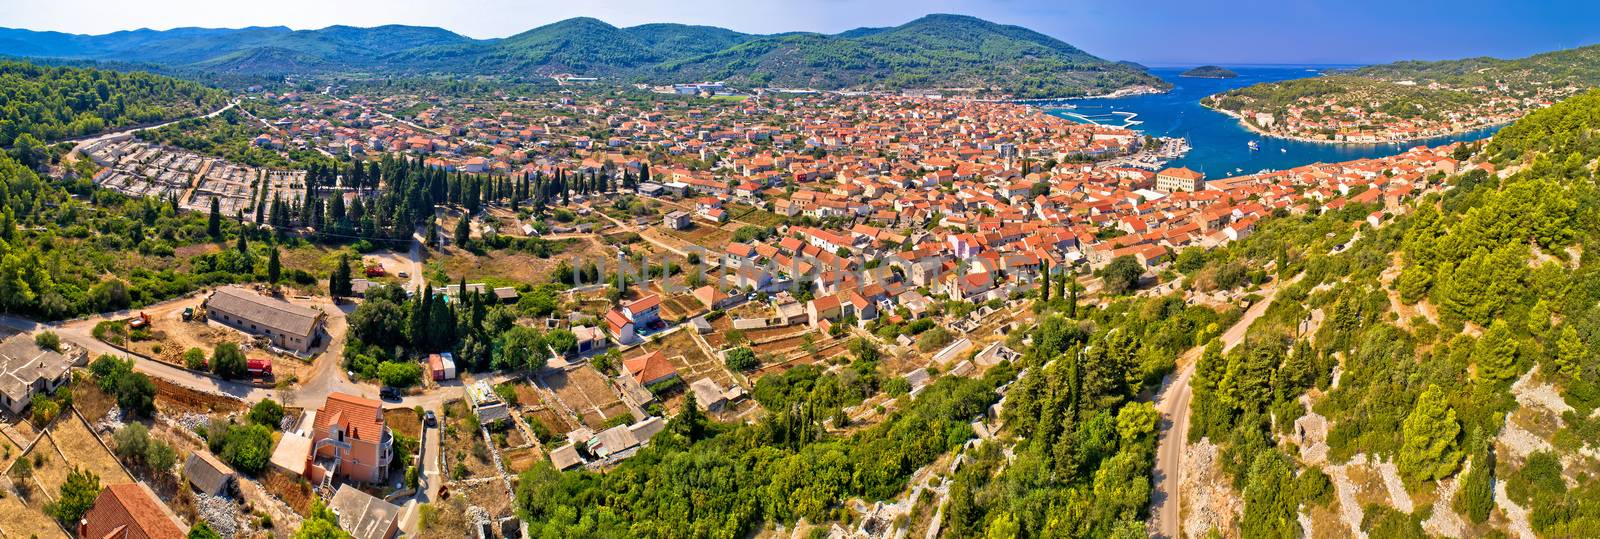 Town of Vela Luka on Korcula island aerial panoramic view, archipelago of southern Dalmatia, Croatia
